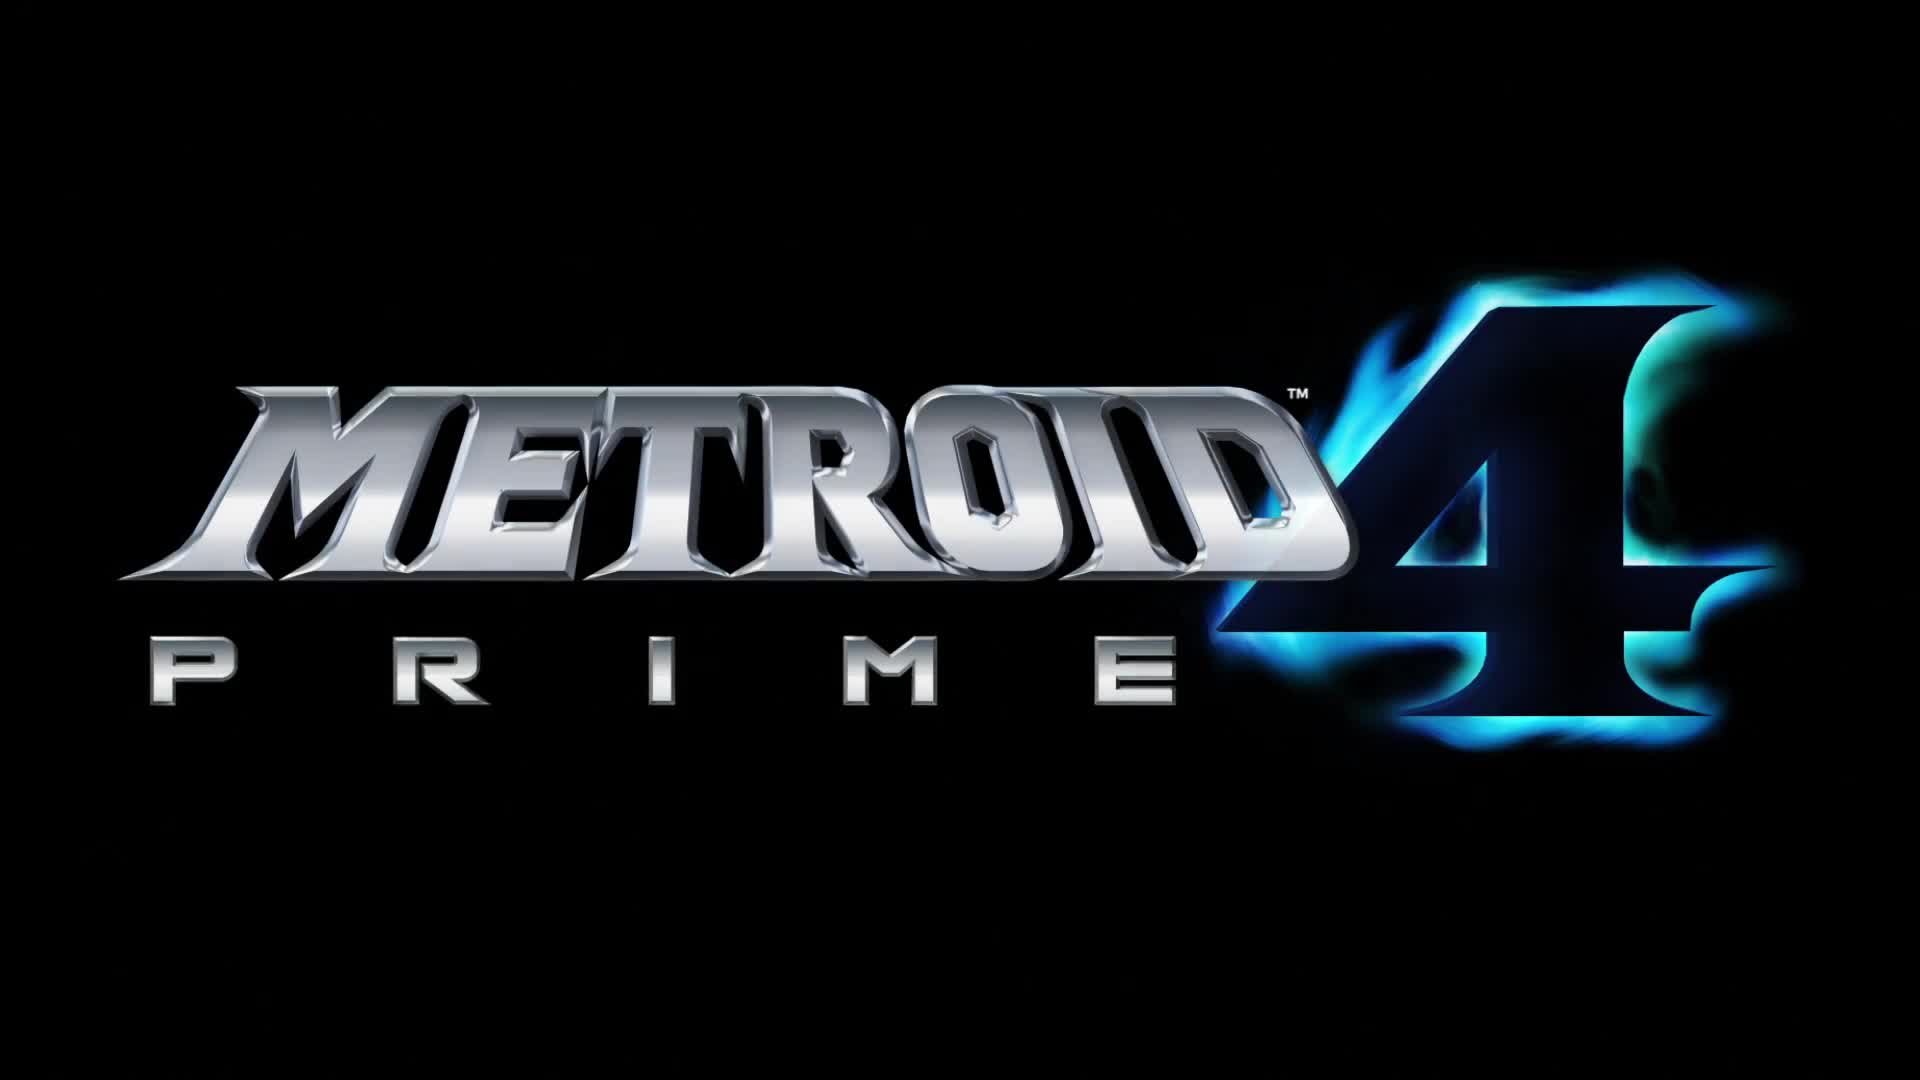 Metroid Prime 4 - First Look